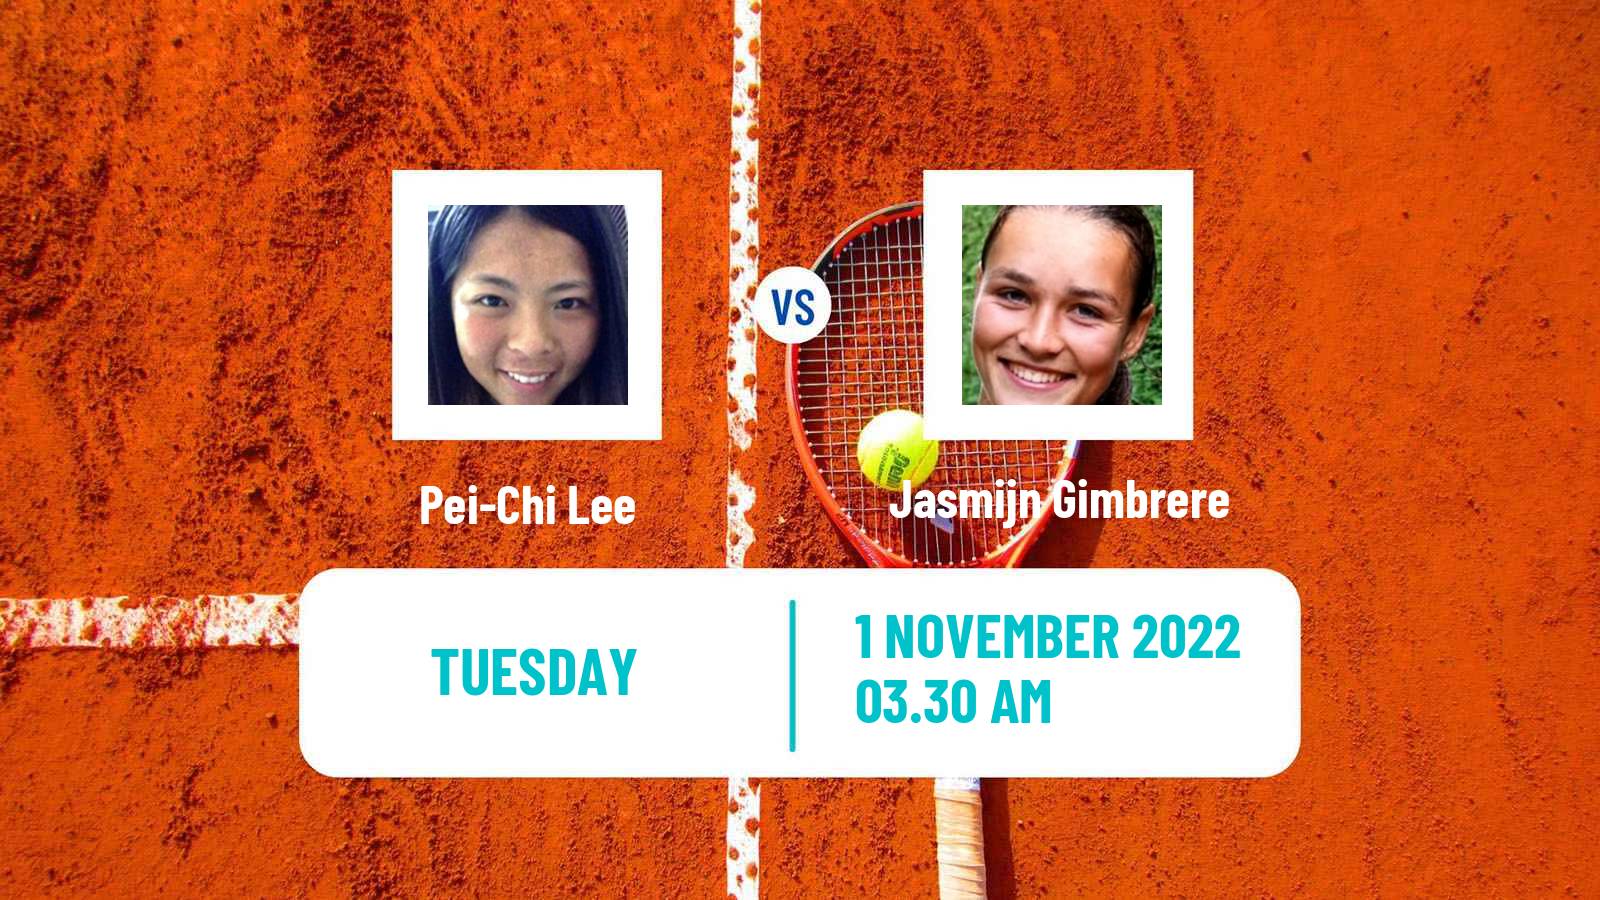 Tennis ITF Tournaments Pei-Chi Lee - Jasmijn Gimbrere